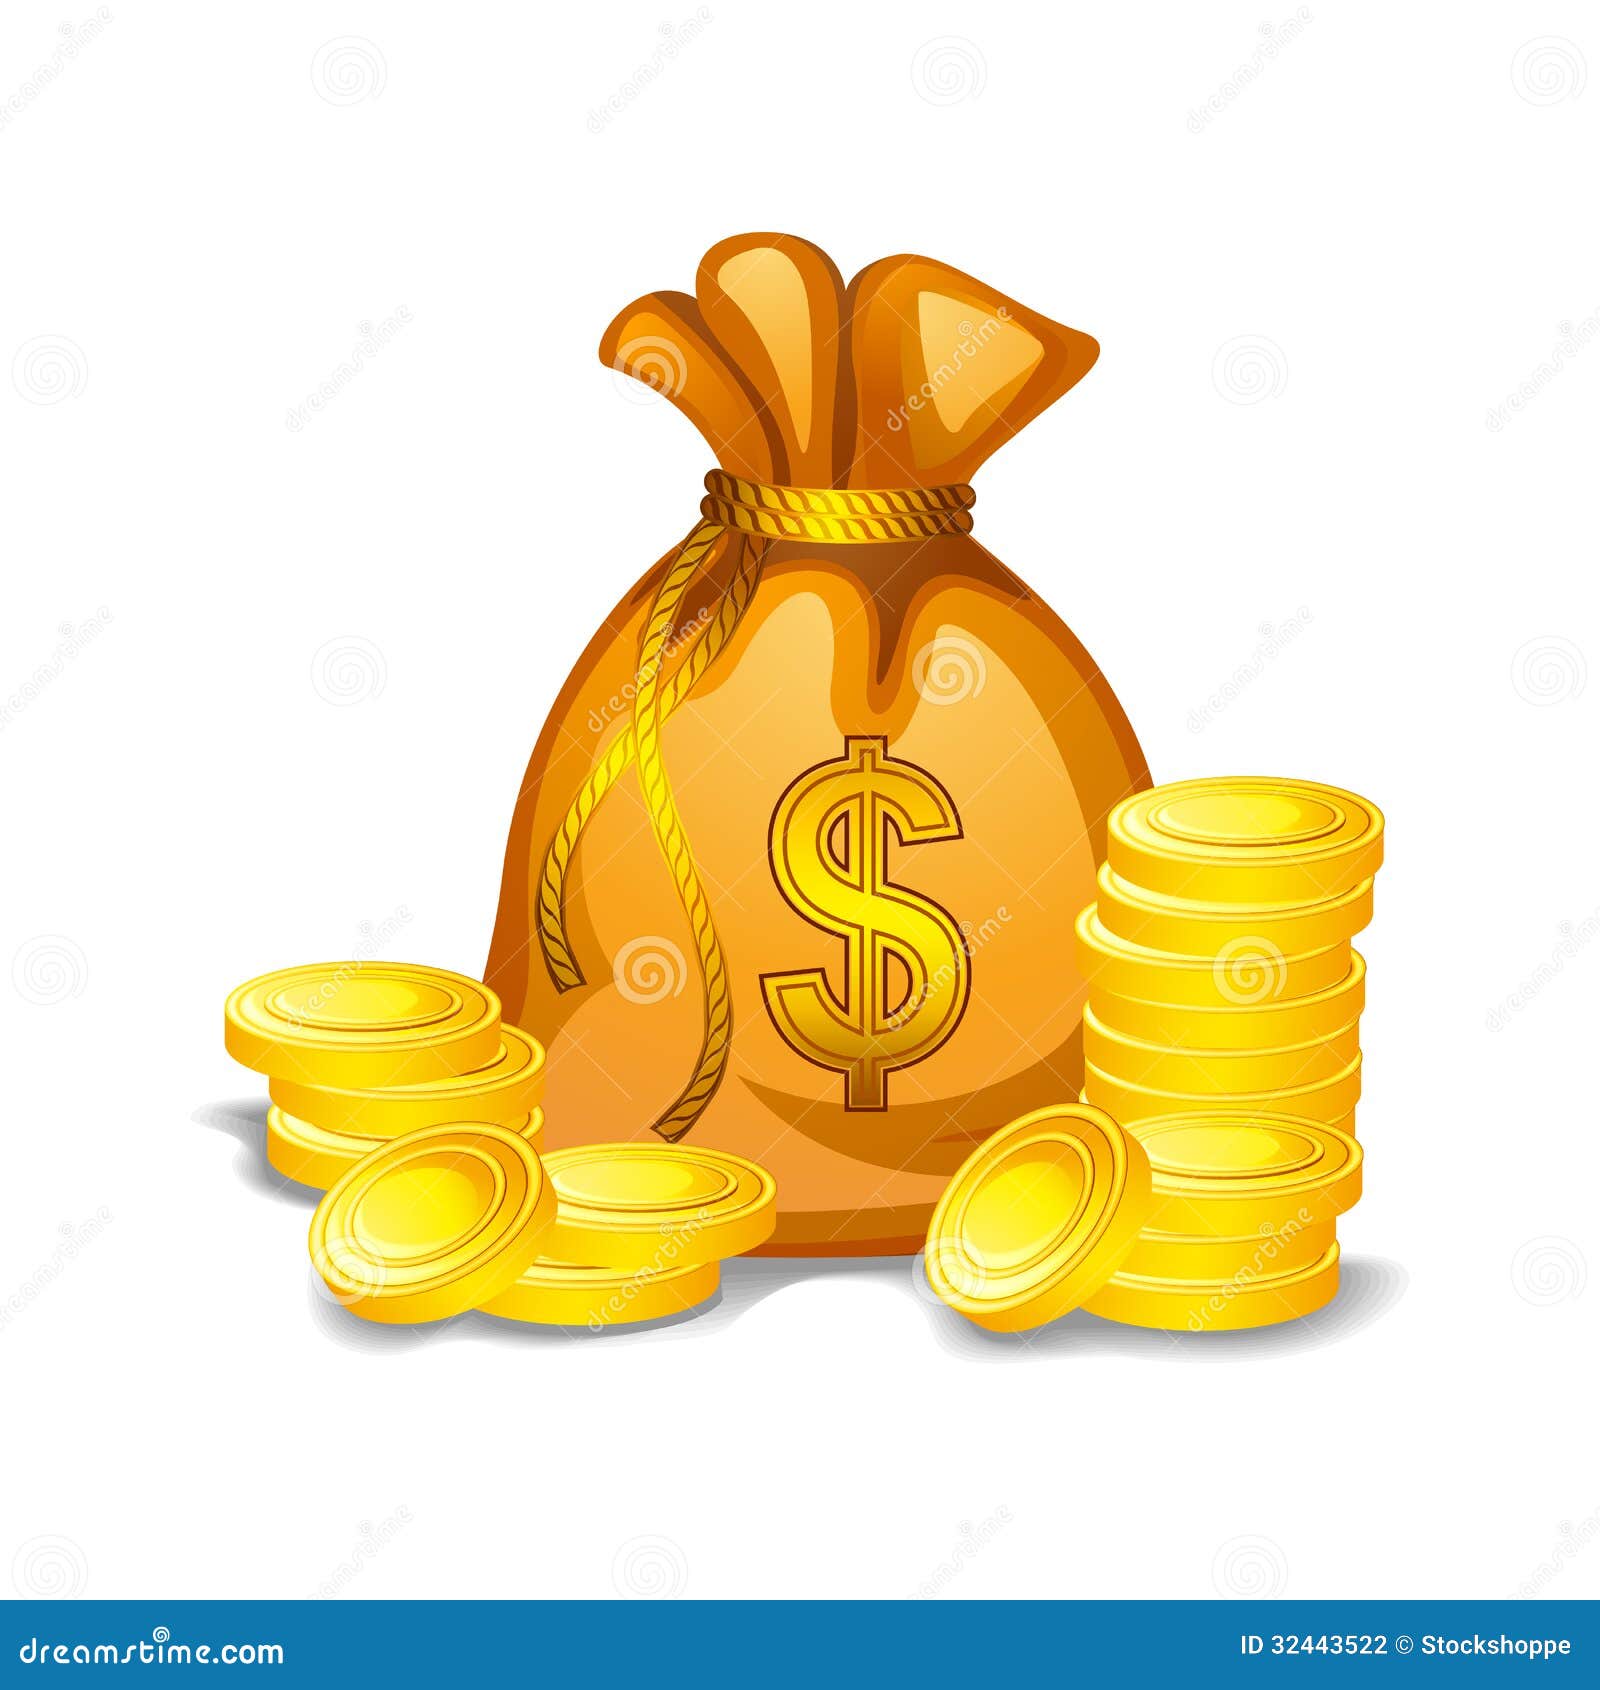 Money Bag stock vector. Illustration of monetary, financial - 32443522